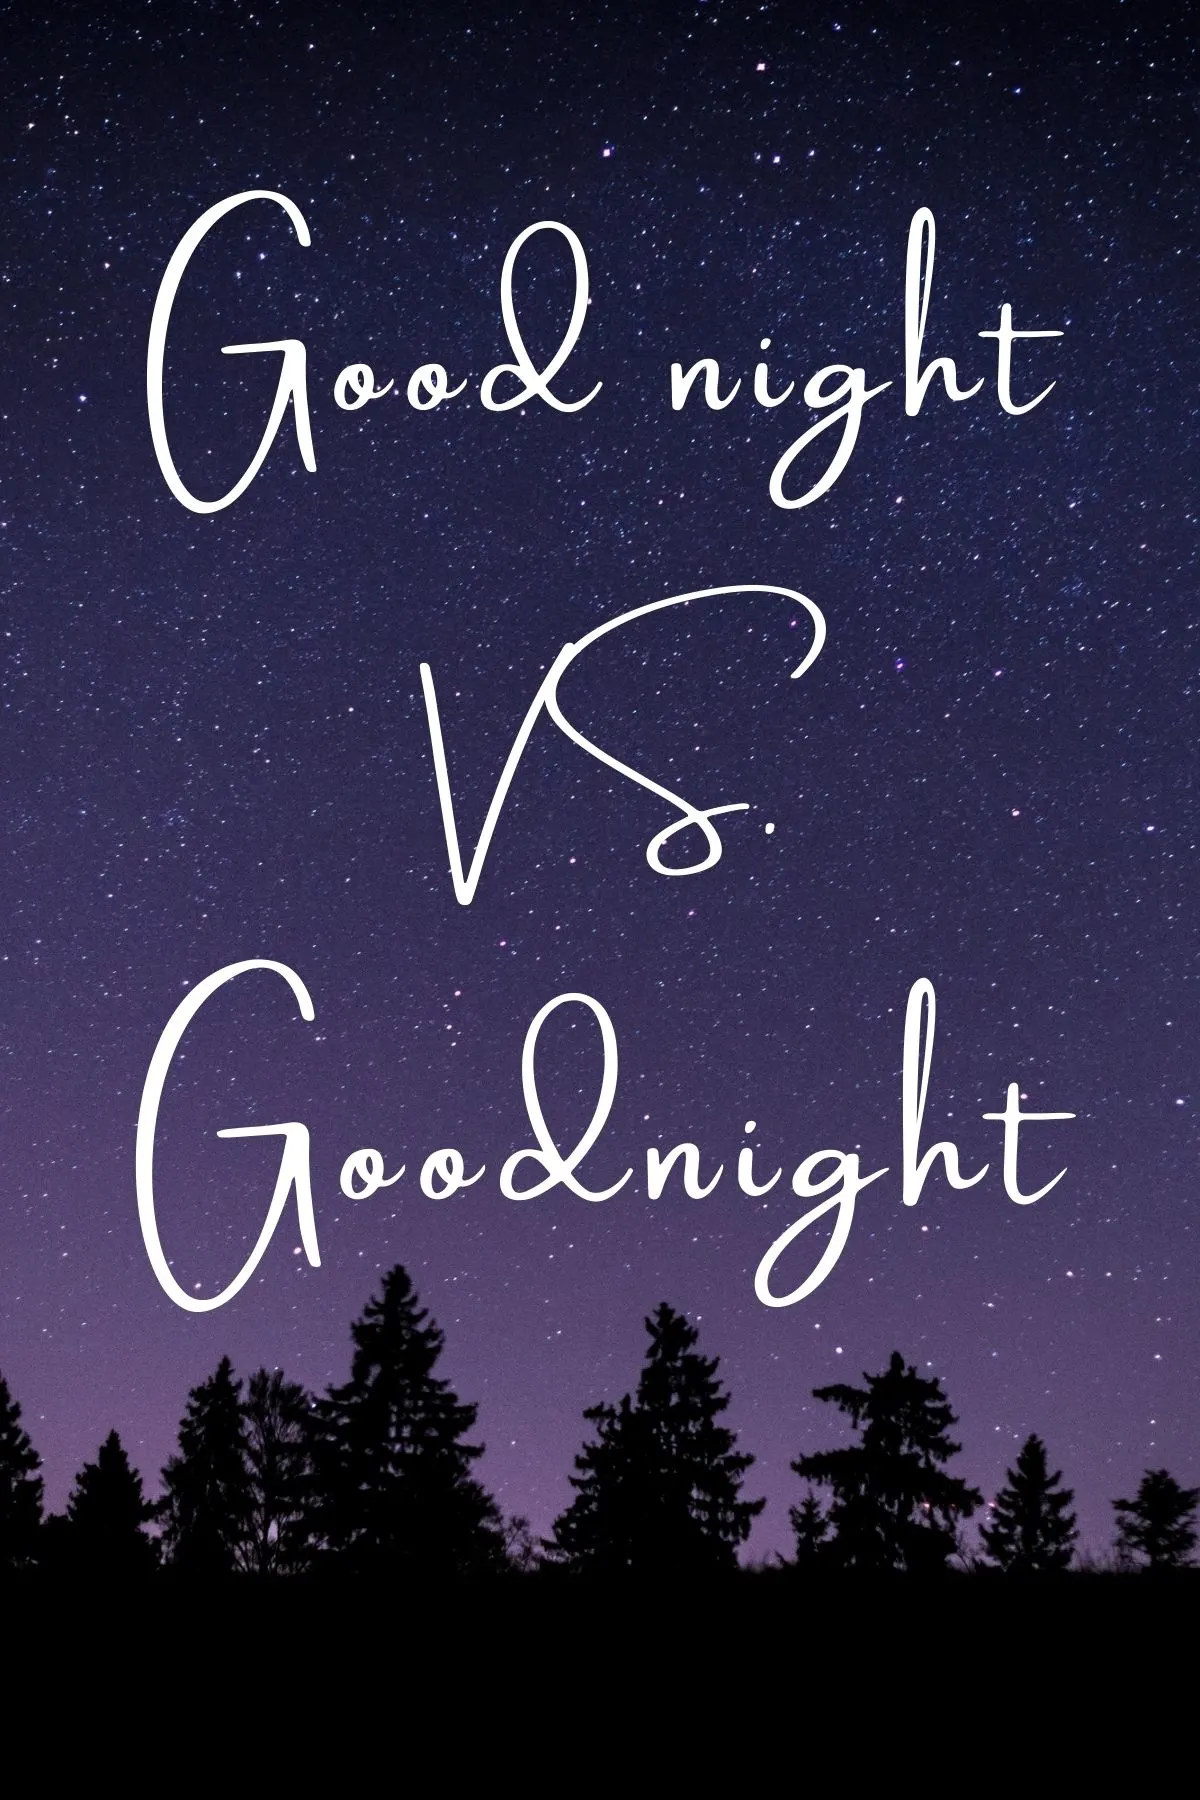 Good night or goodnight Goodnight or